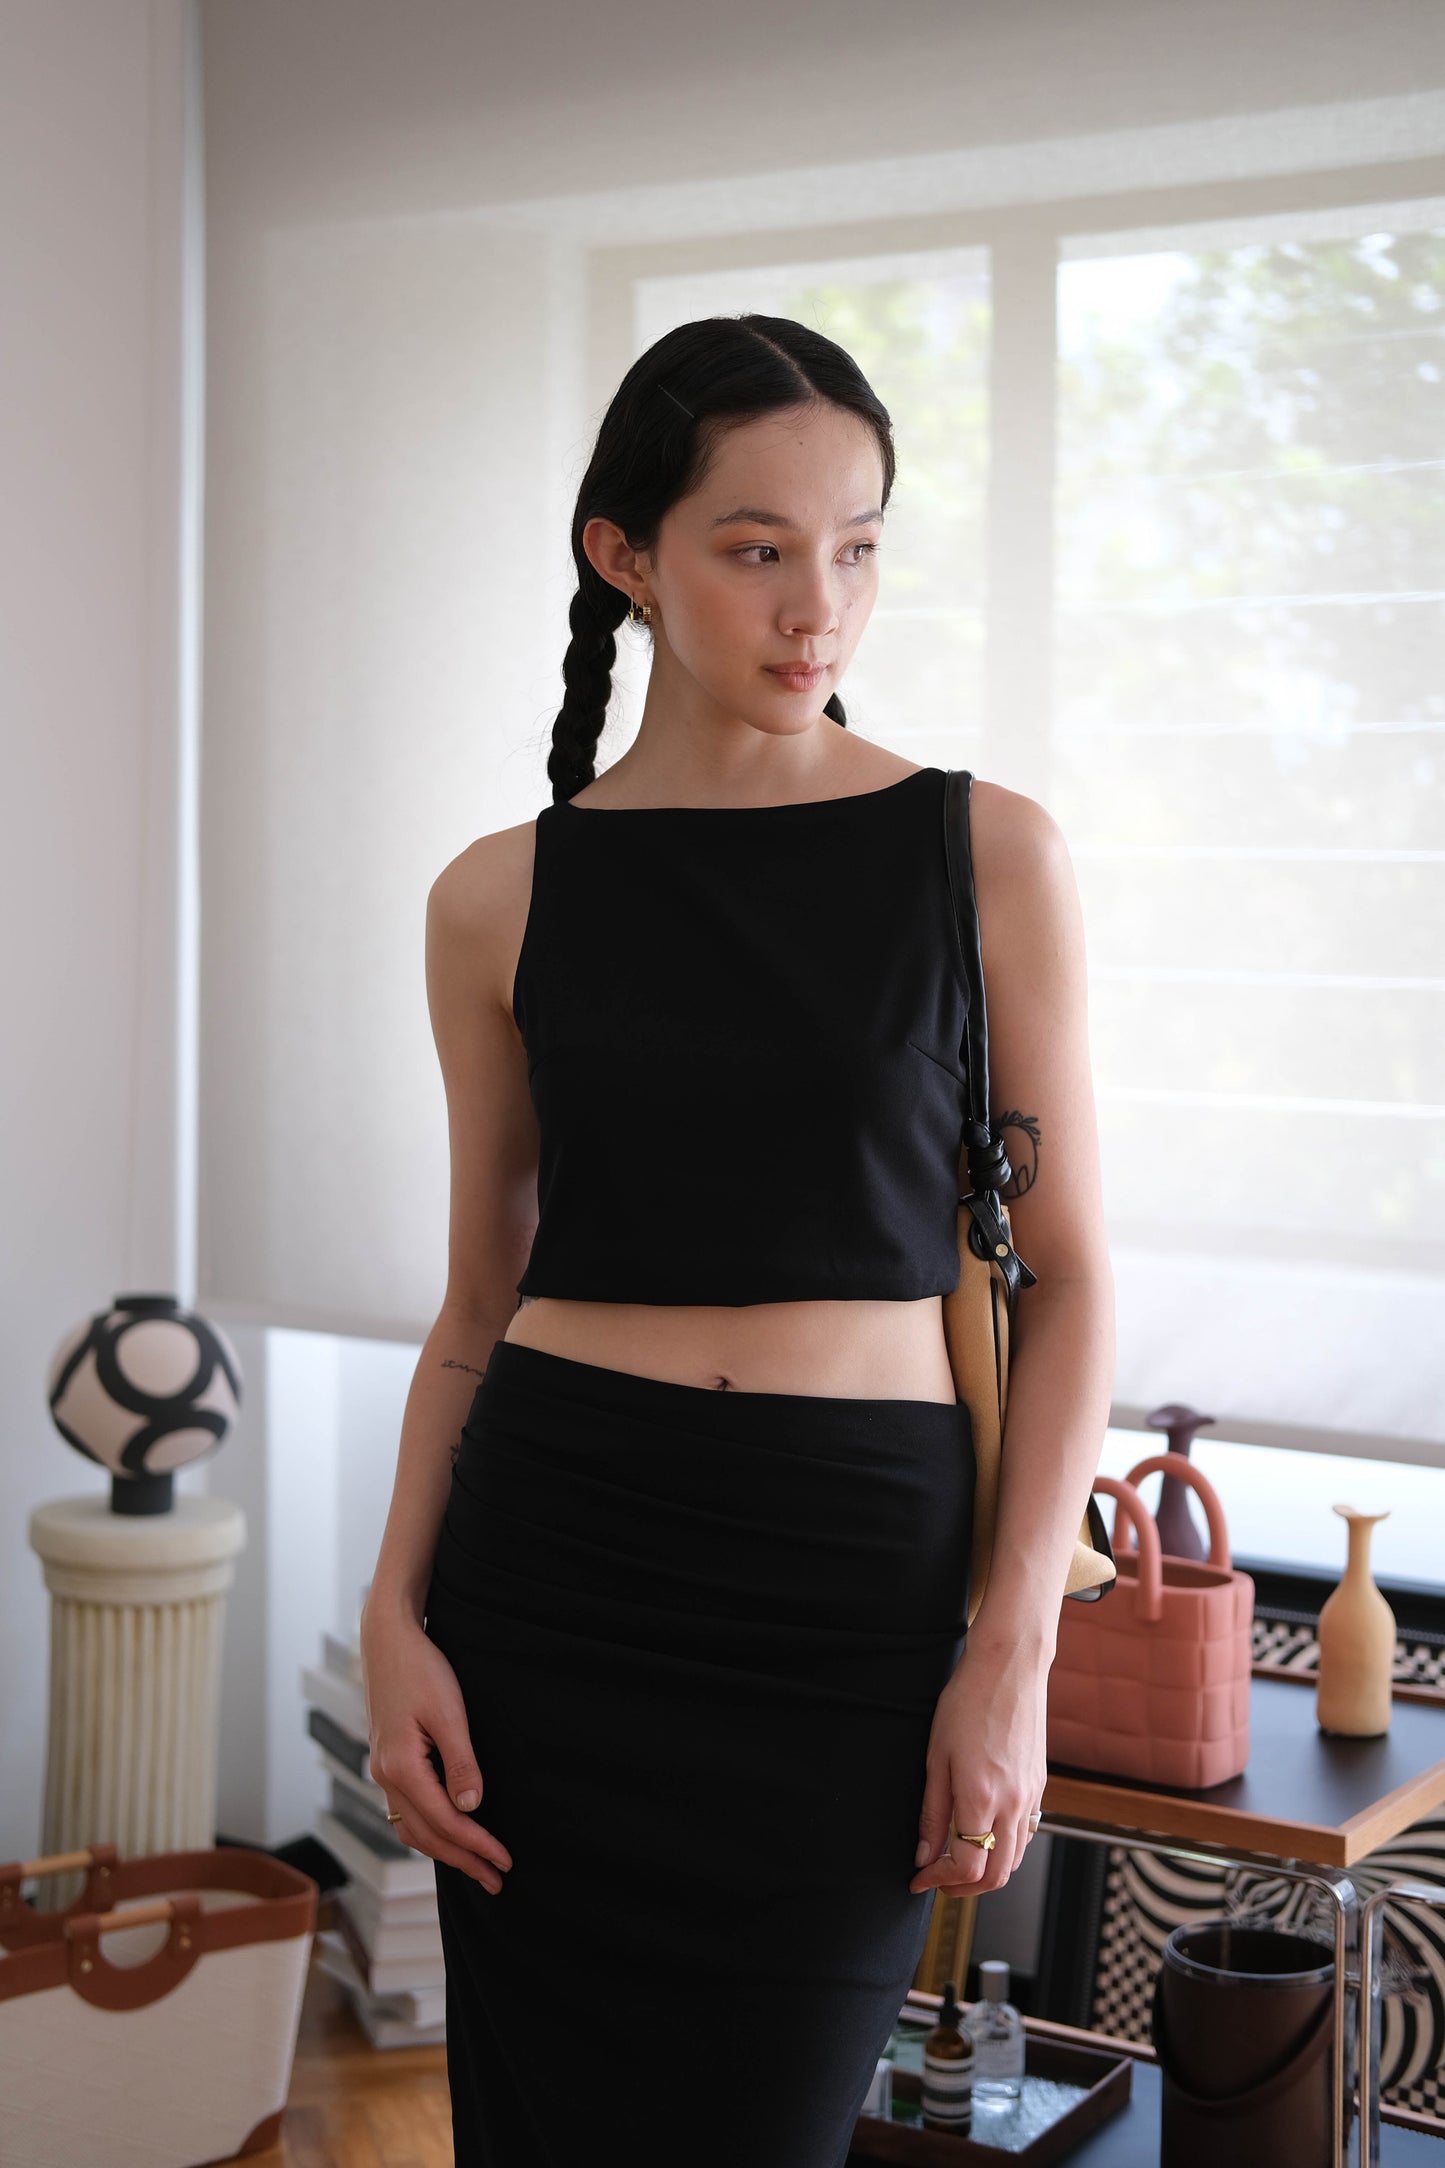 Sleeveless tank top + high waist split skirt in classic black